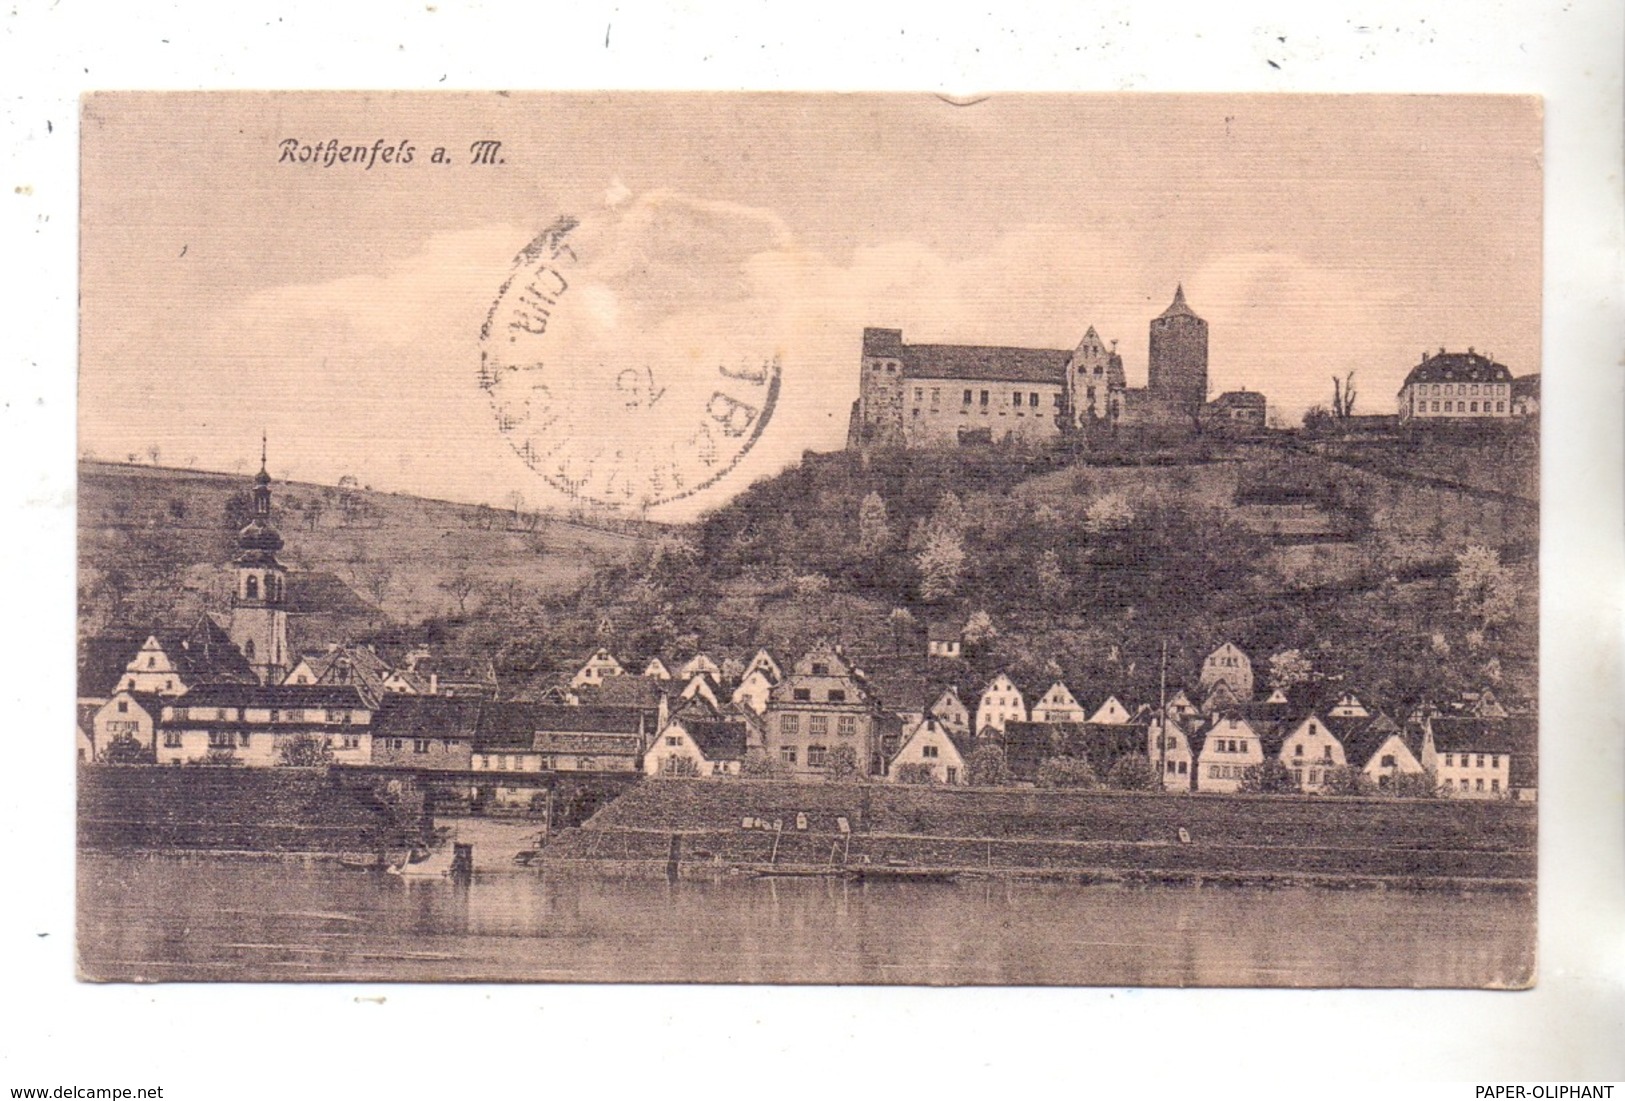 8774 ROTHENFELS, Gesamtansicht 1910, Bahnpost - Karlstadt